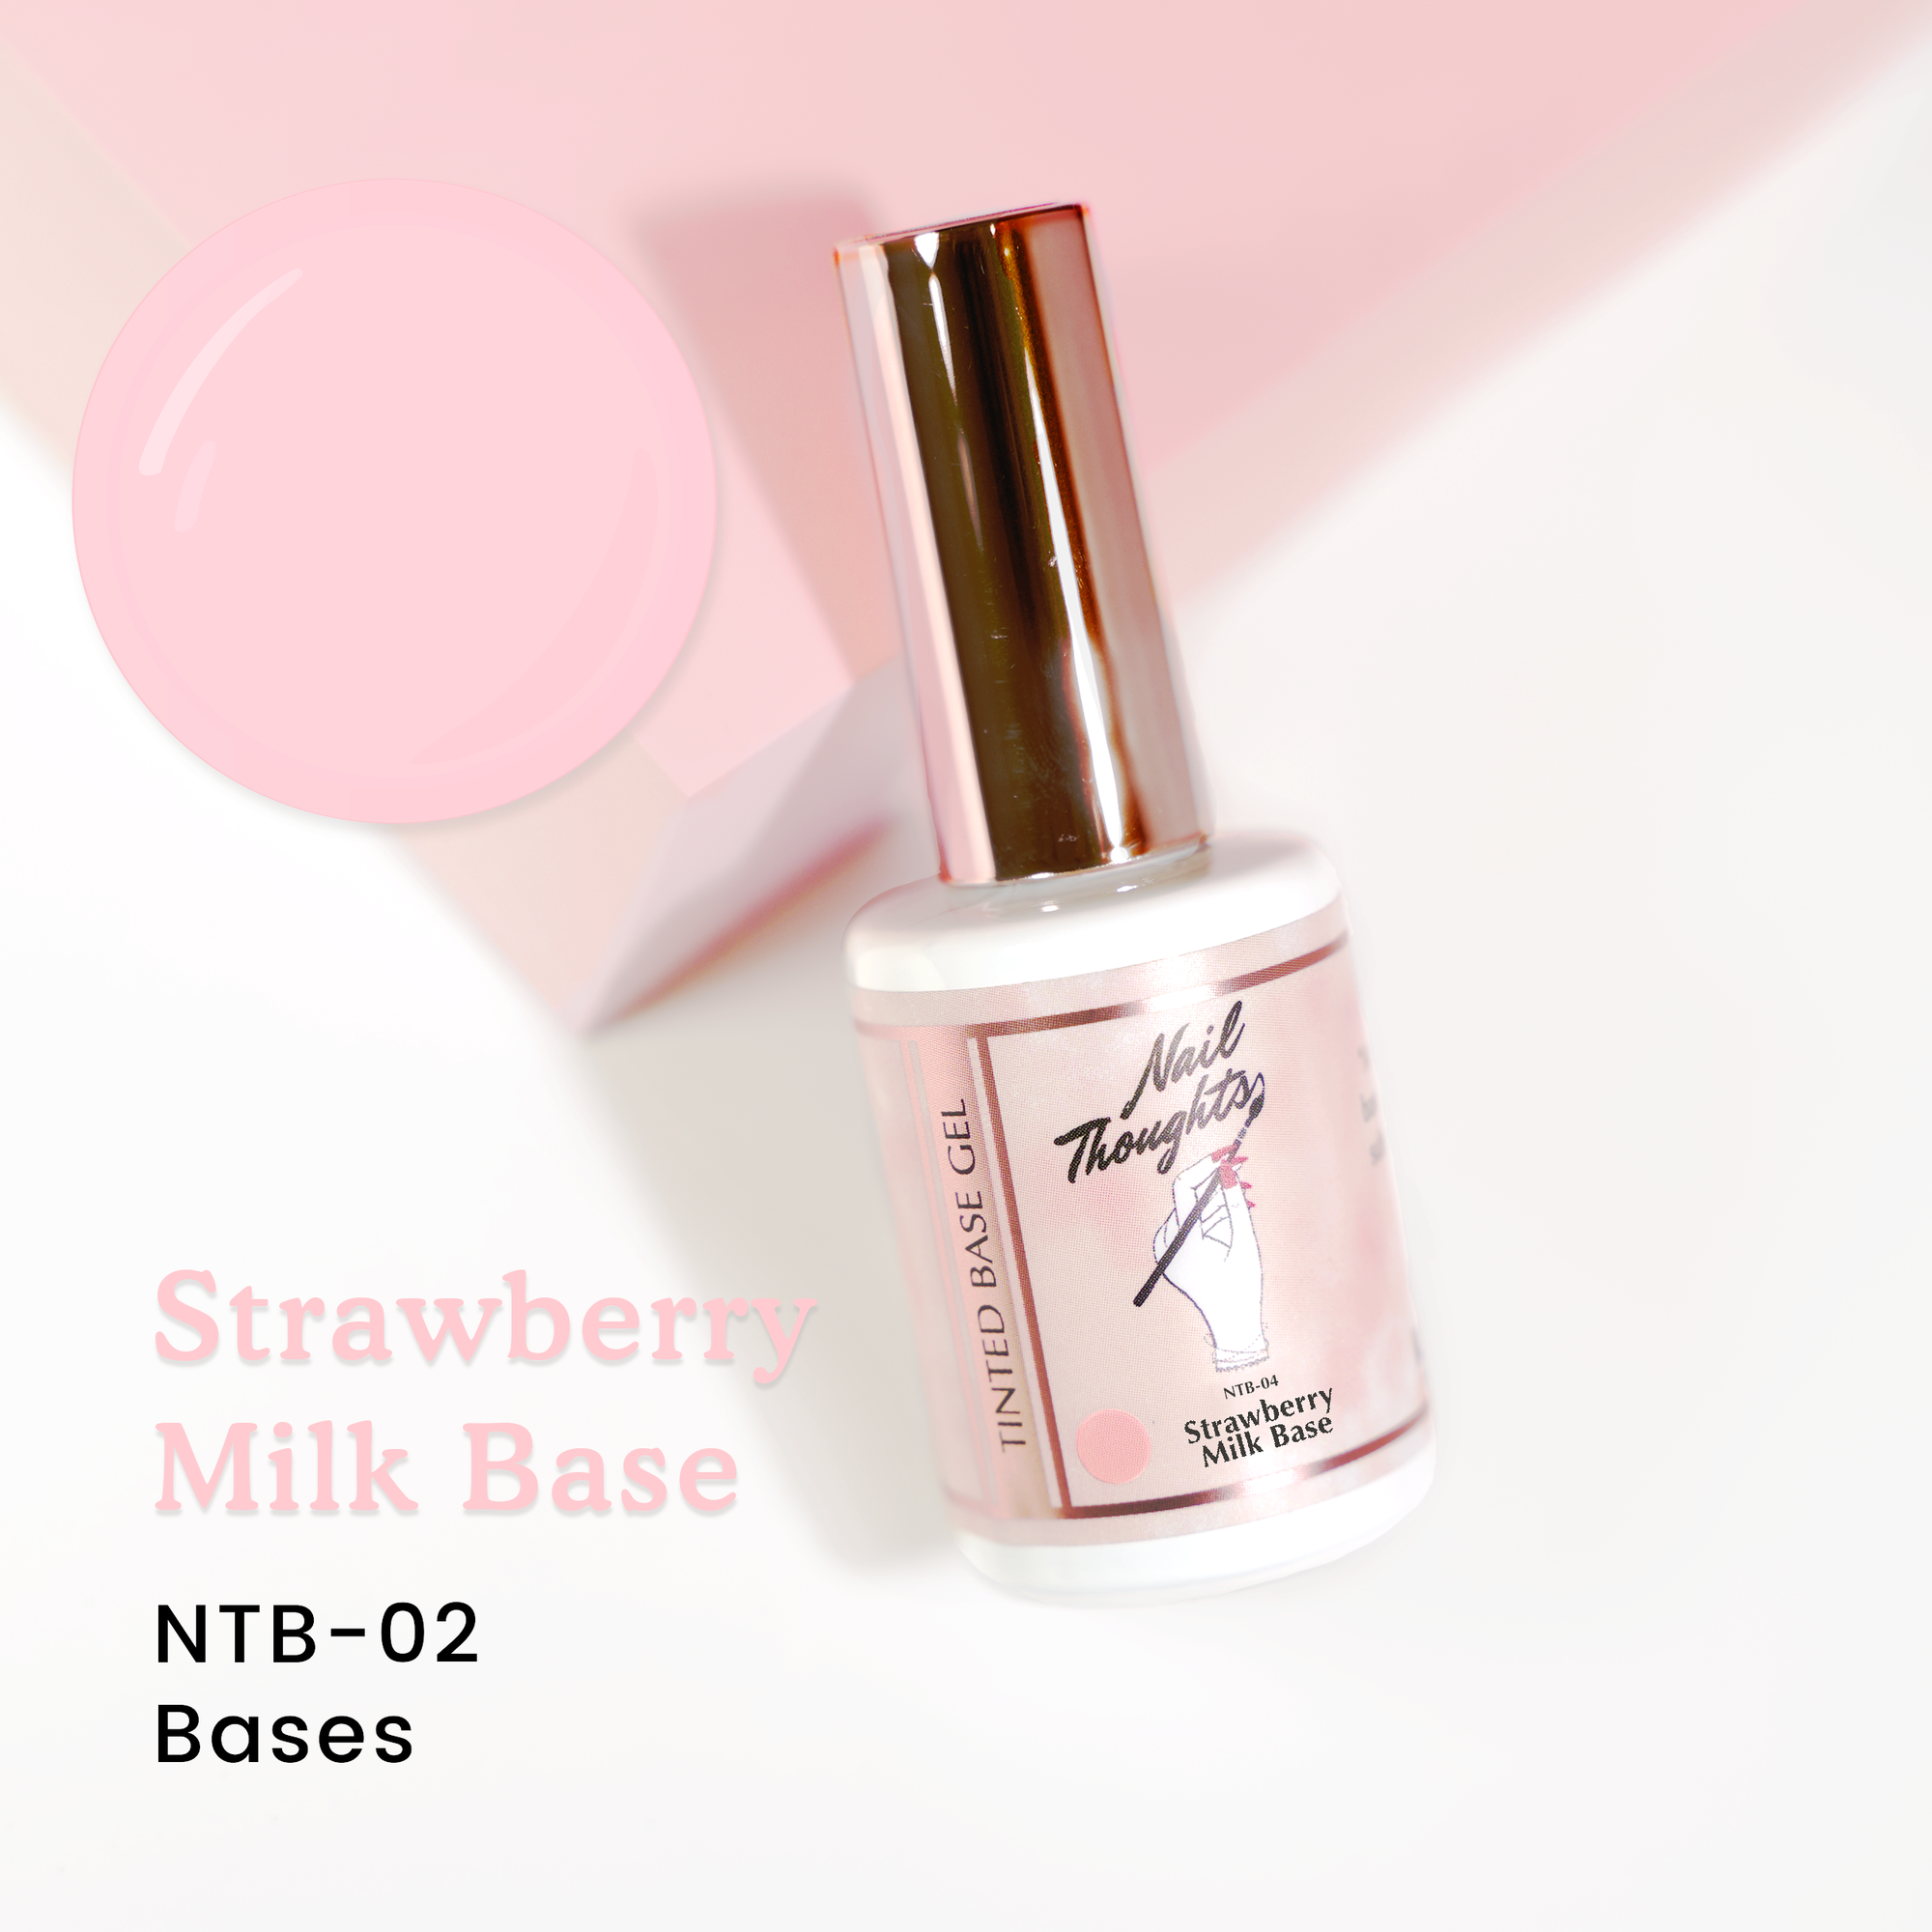 Strawberry Milk Base NTB-02